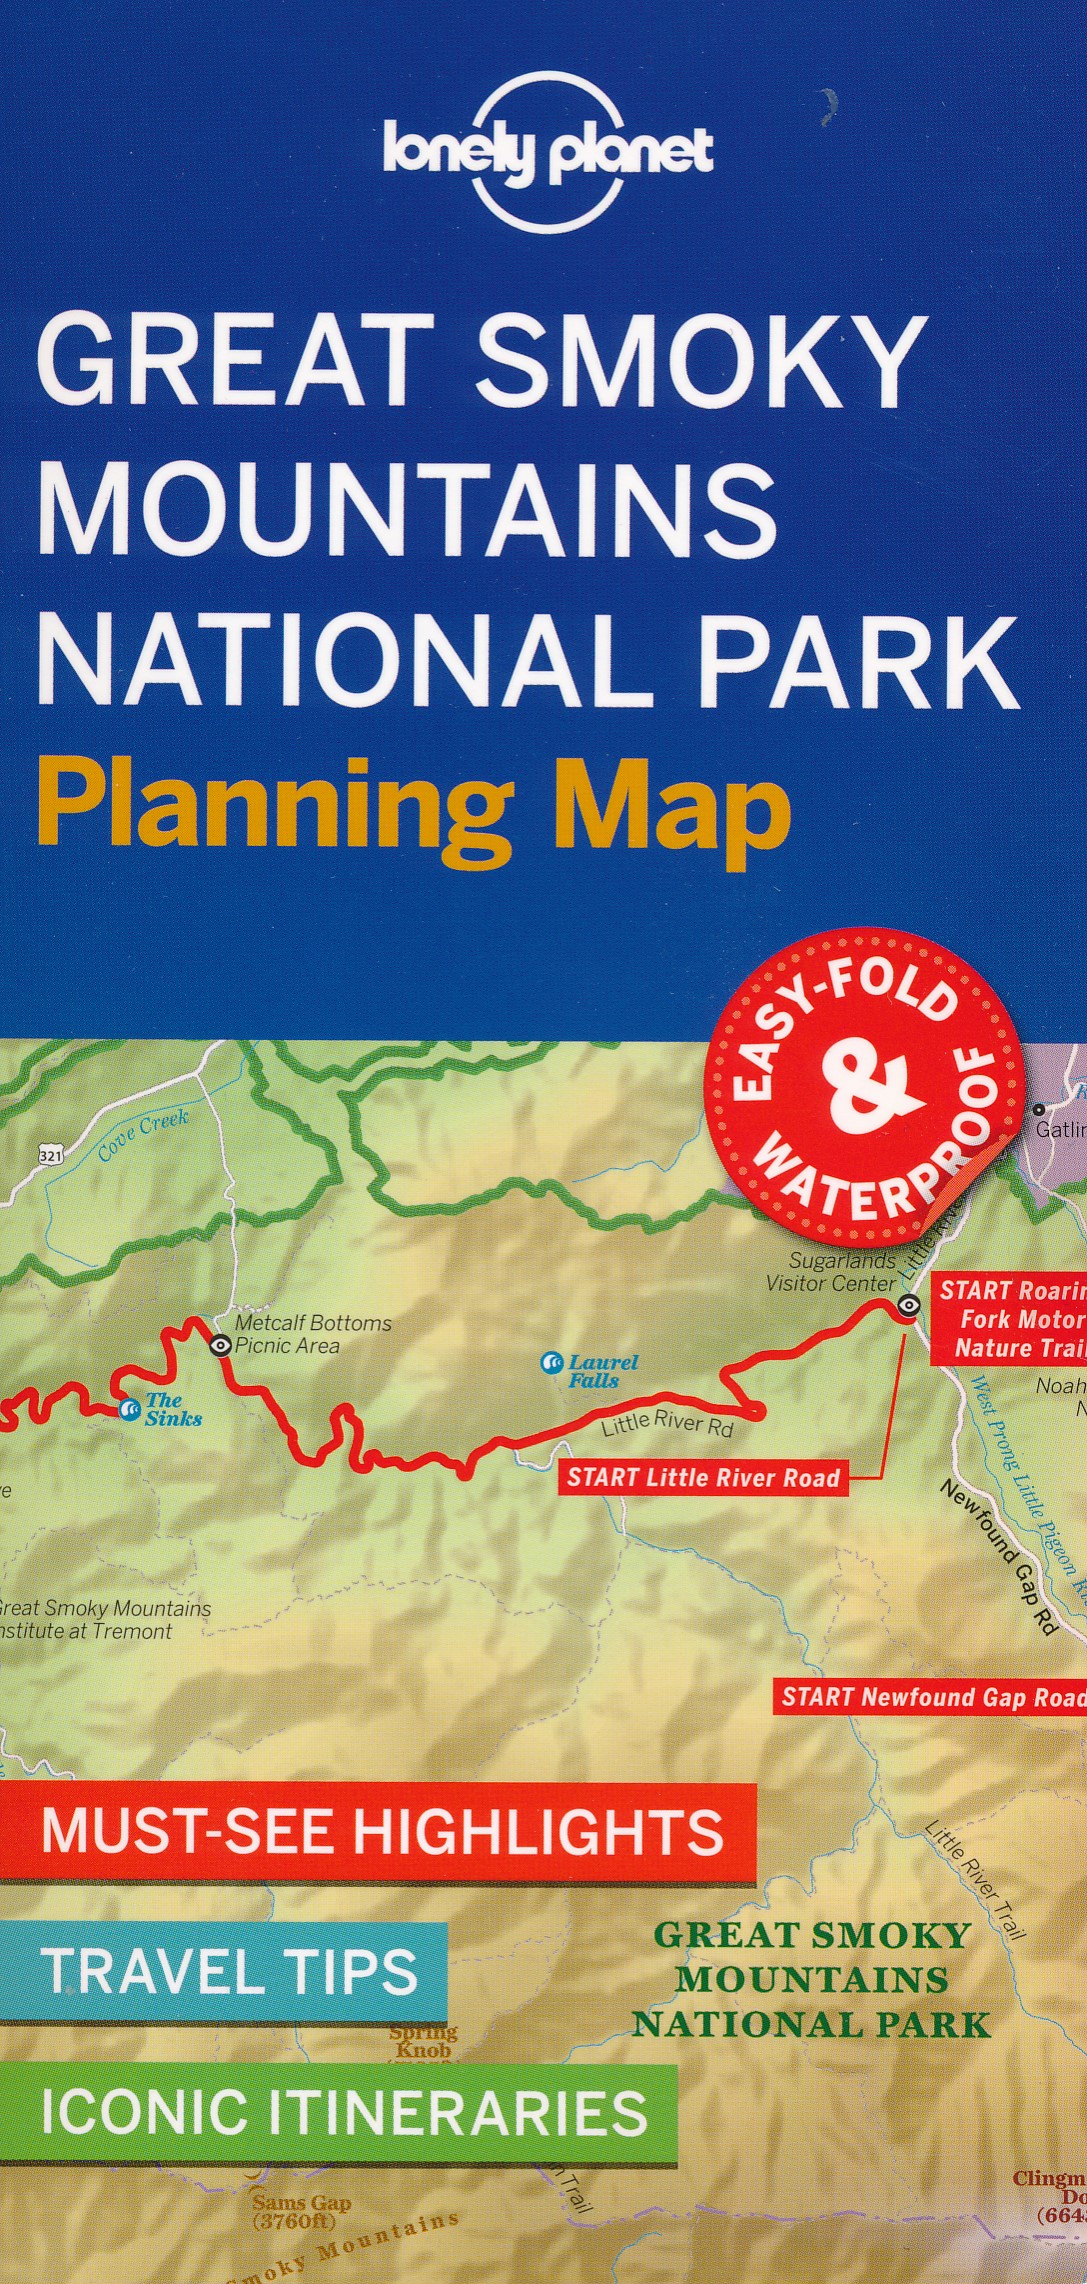 Online bestellen: Wegenkaart - landkaart Planning Map Great Smoky Mountains National Park | Lonely Planet